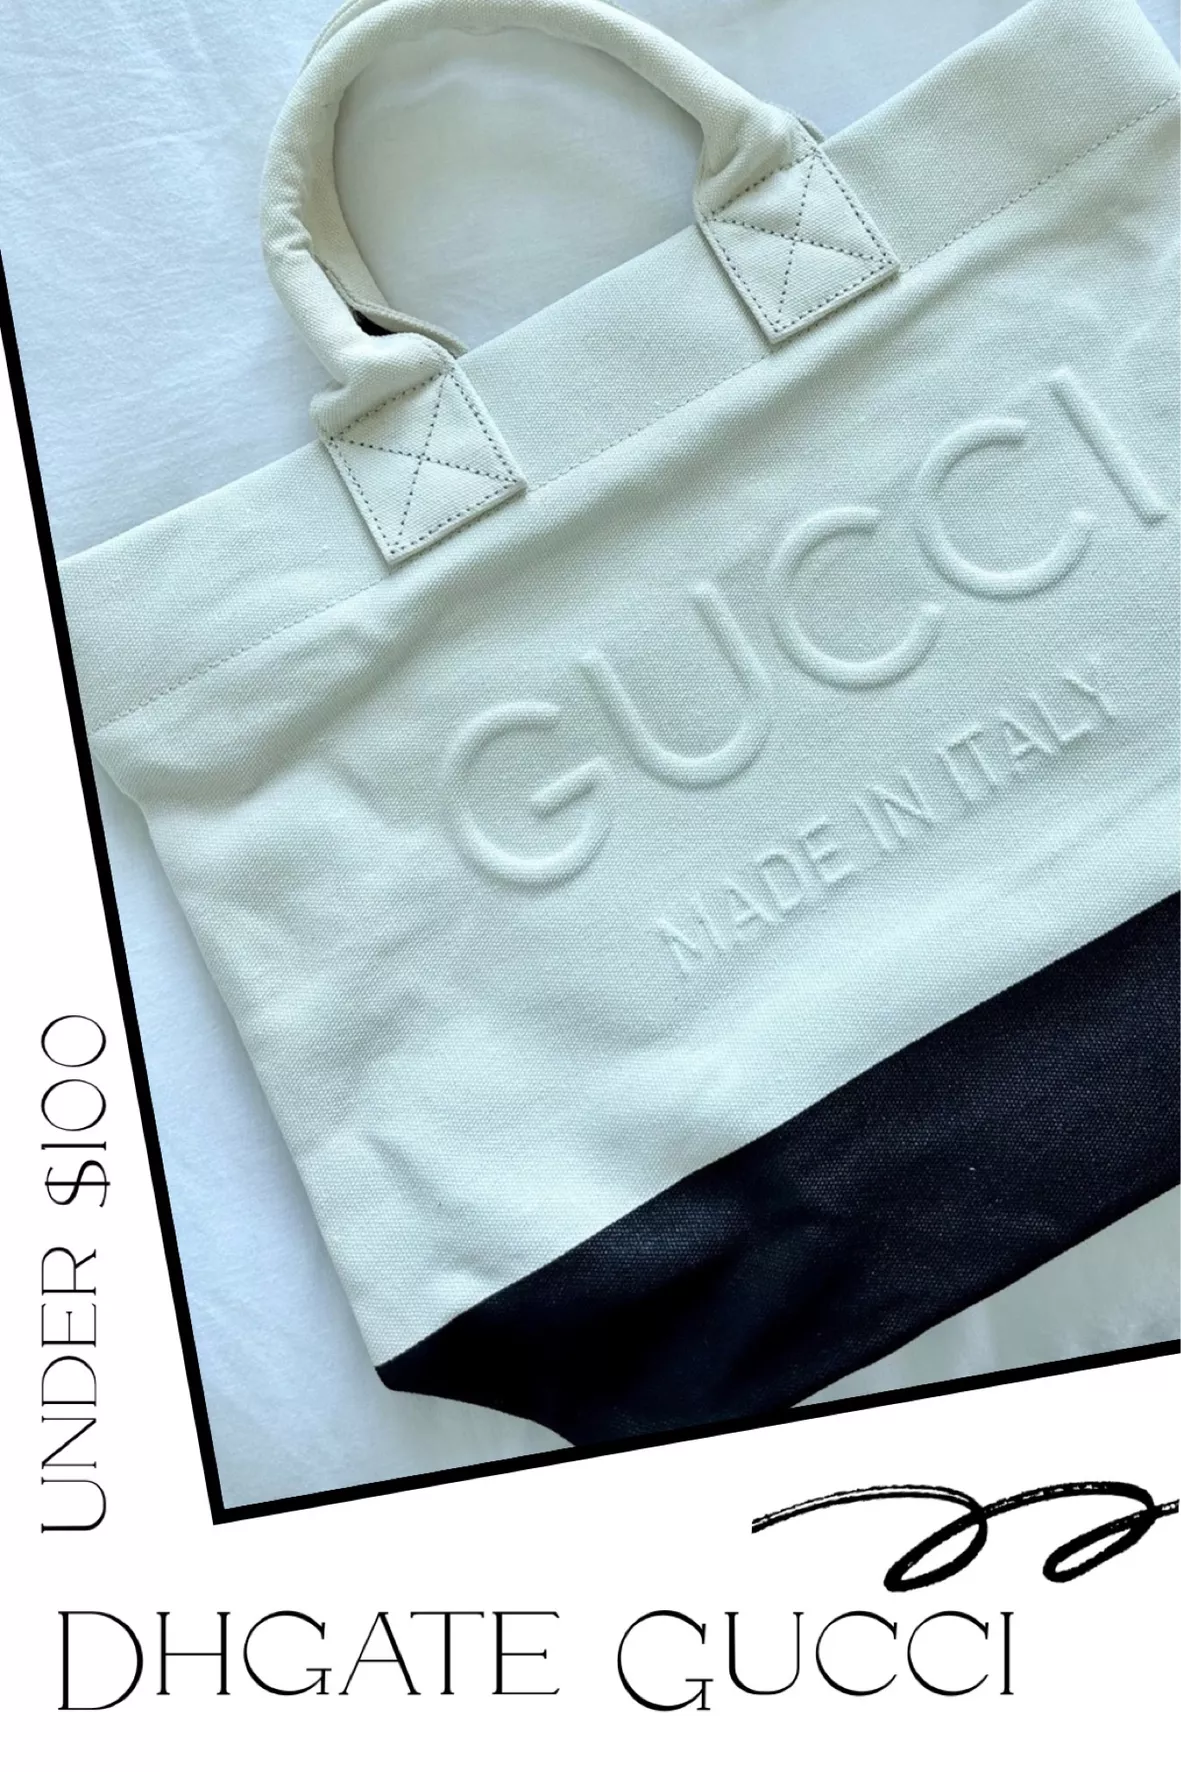 Green Gucci Diana bamboo bag on dhgate #LTKitbag #LTKsalealert